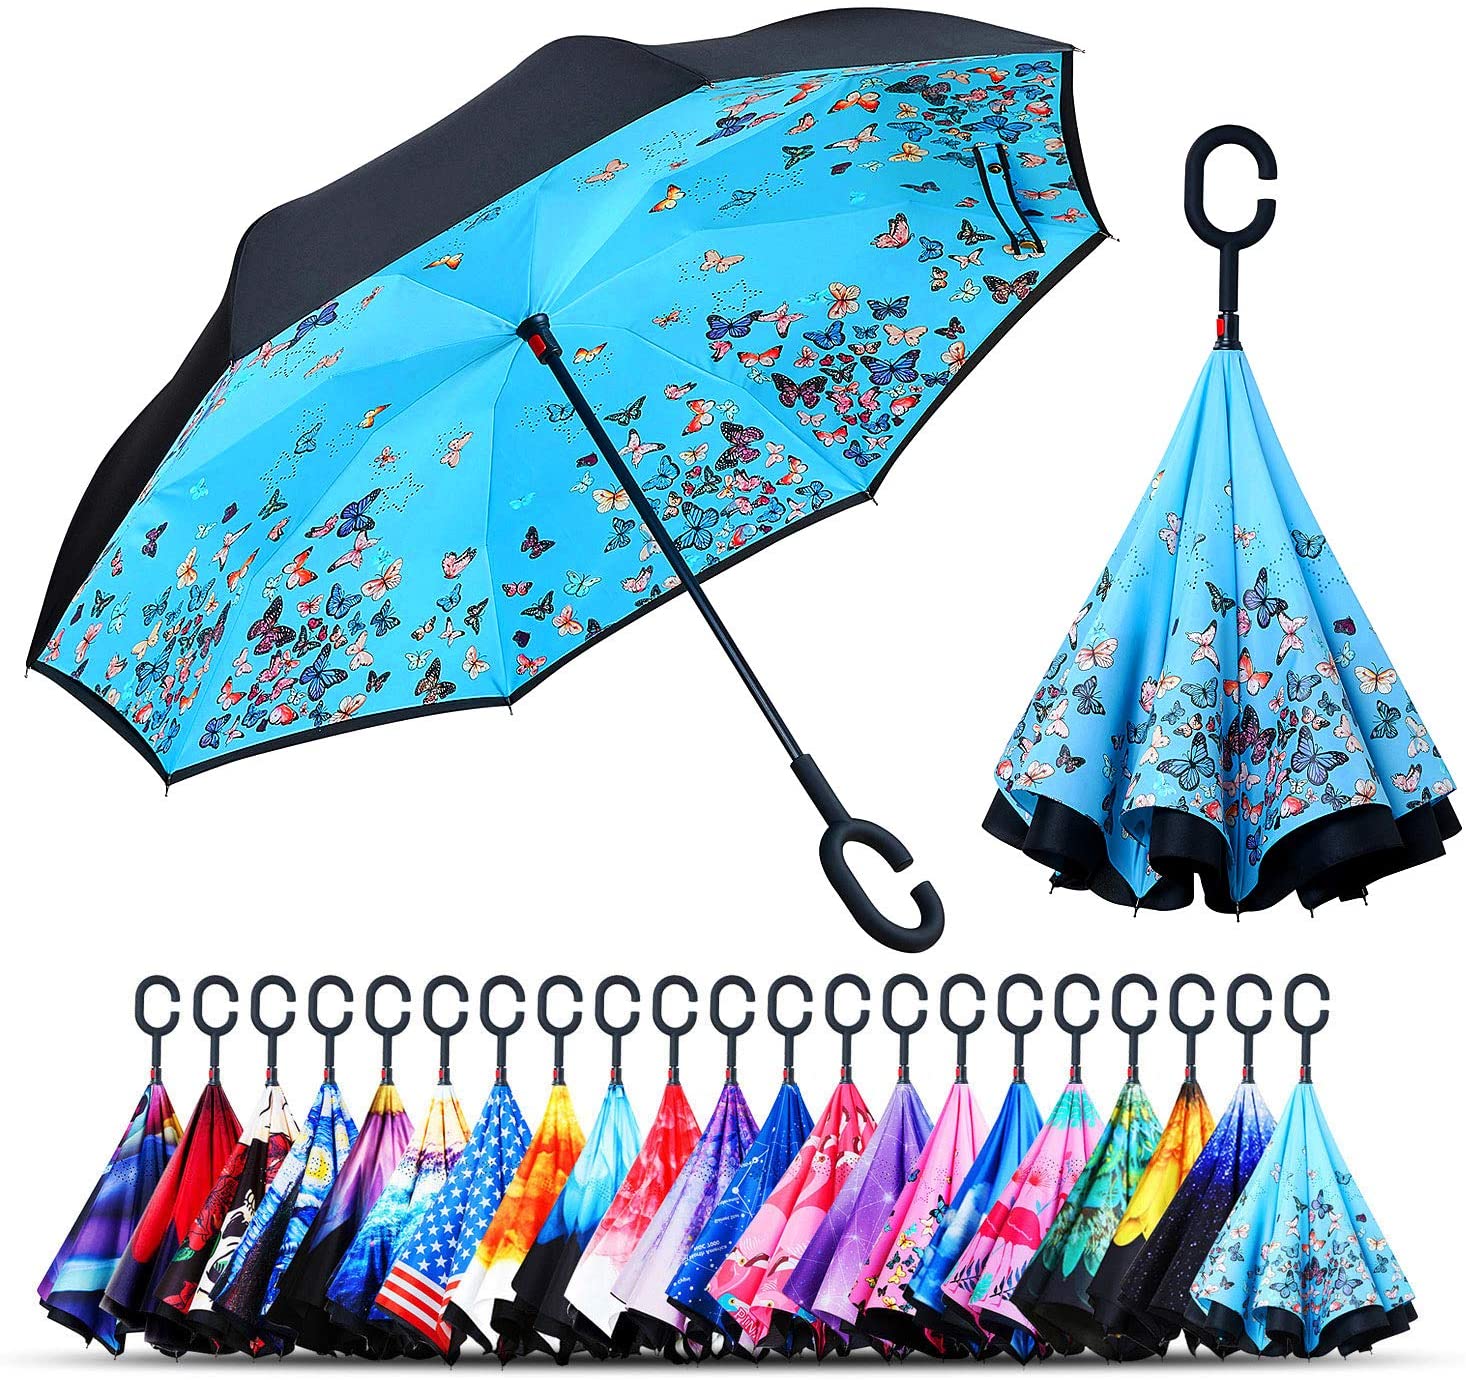 YSLJH Travel Umbrella Double Layer Ladies Student Travel Umbrella UV Protection Outdoor Folding Tri-fold Umbrella Black